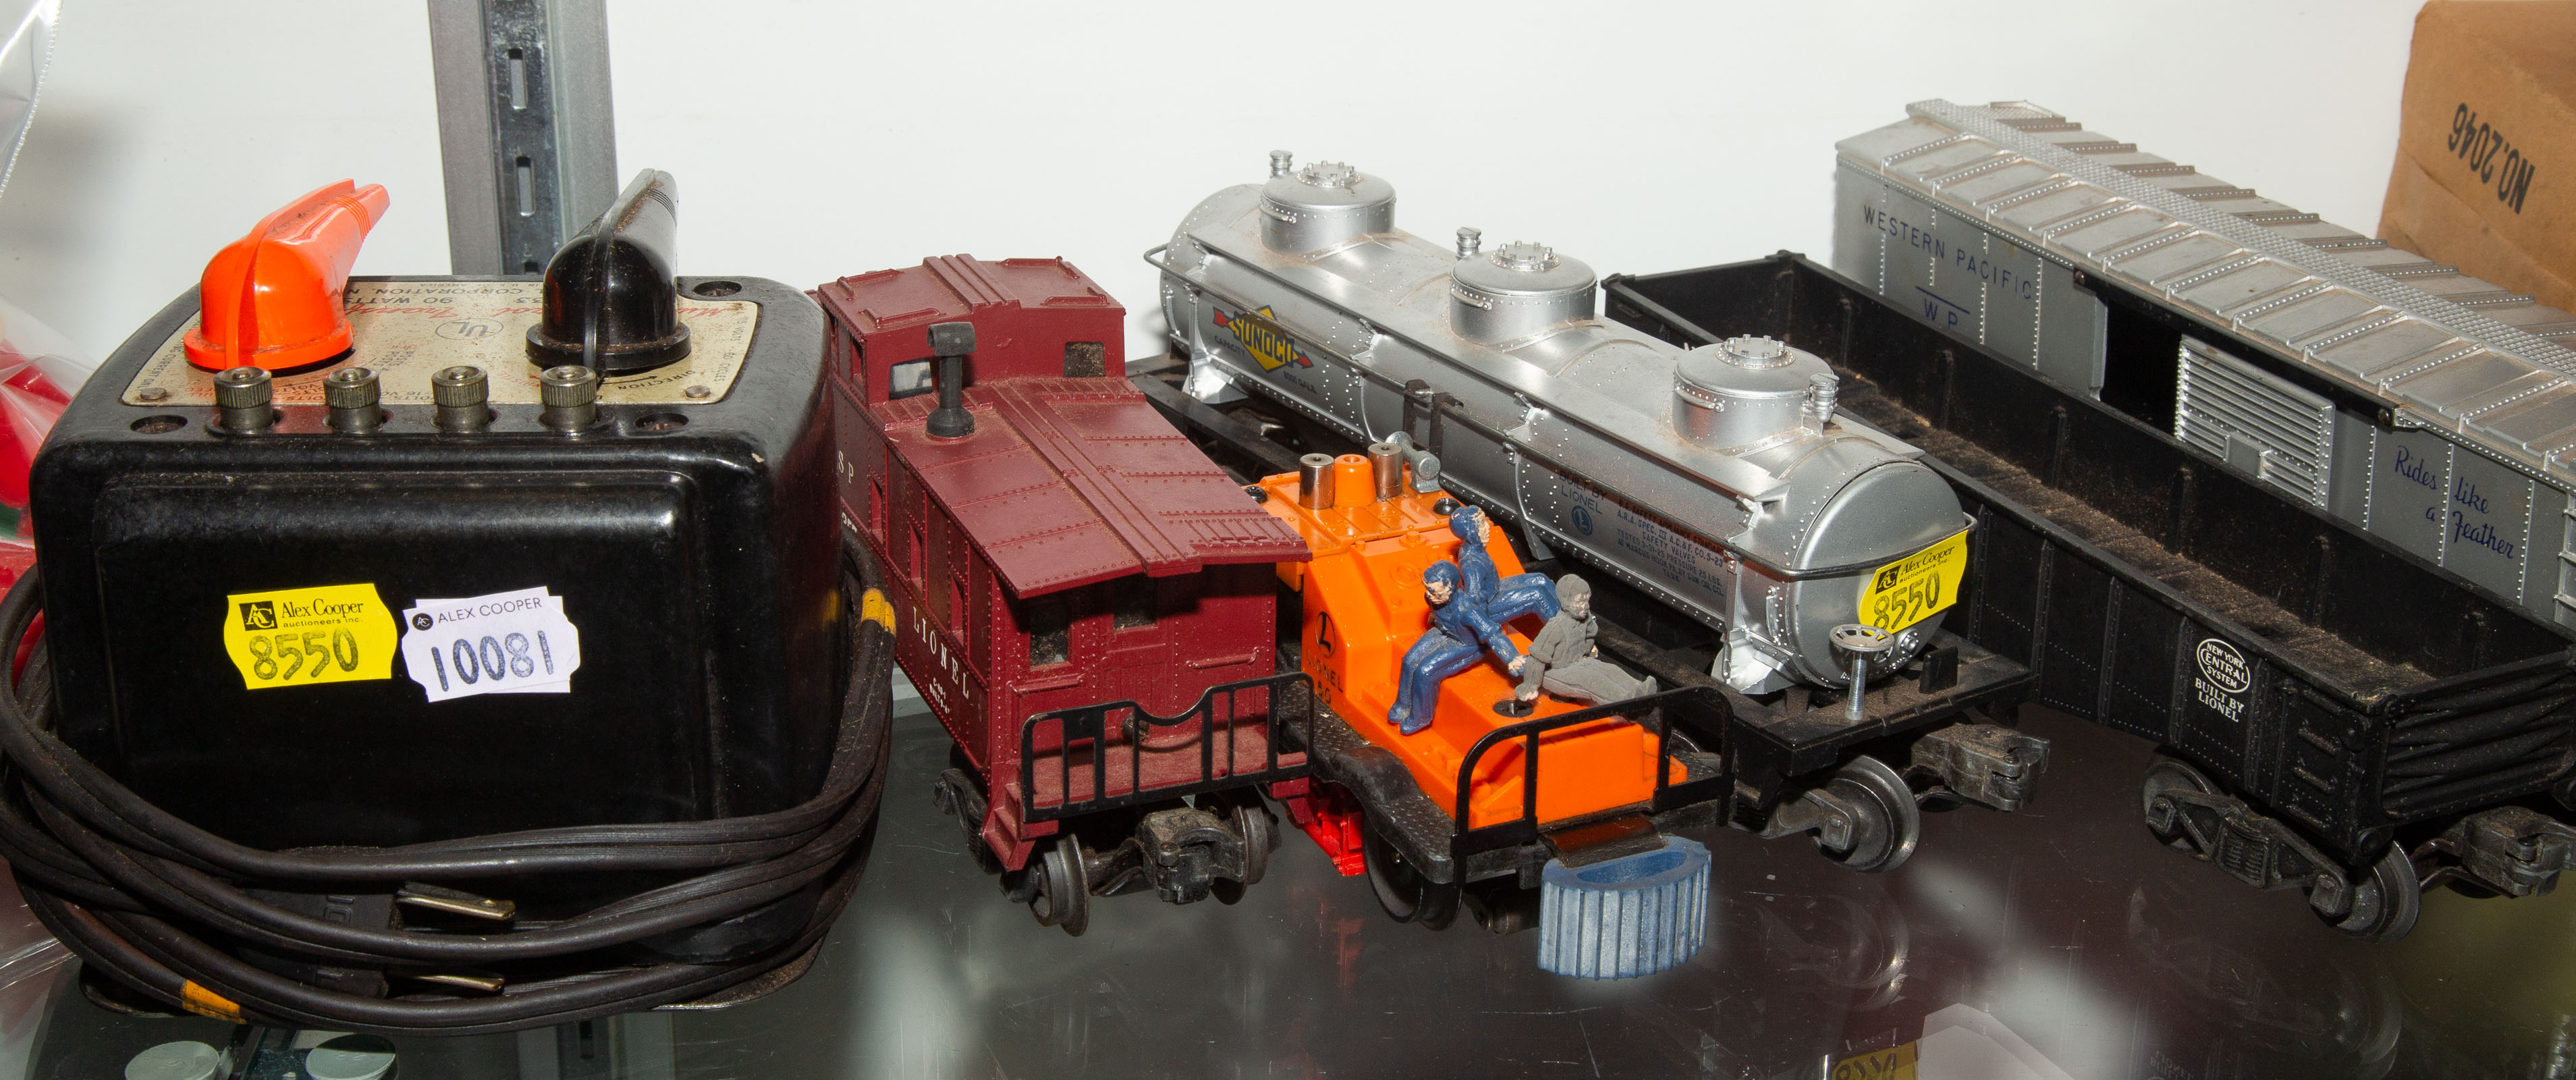 LIONEL 2046 TRAIN SET Includes transformer